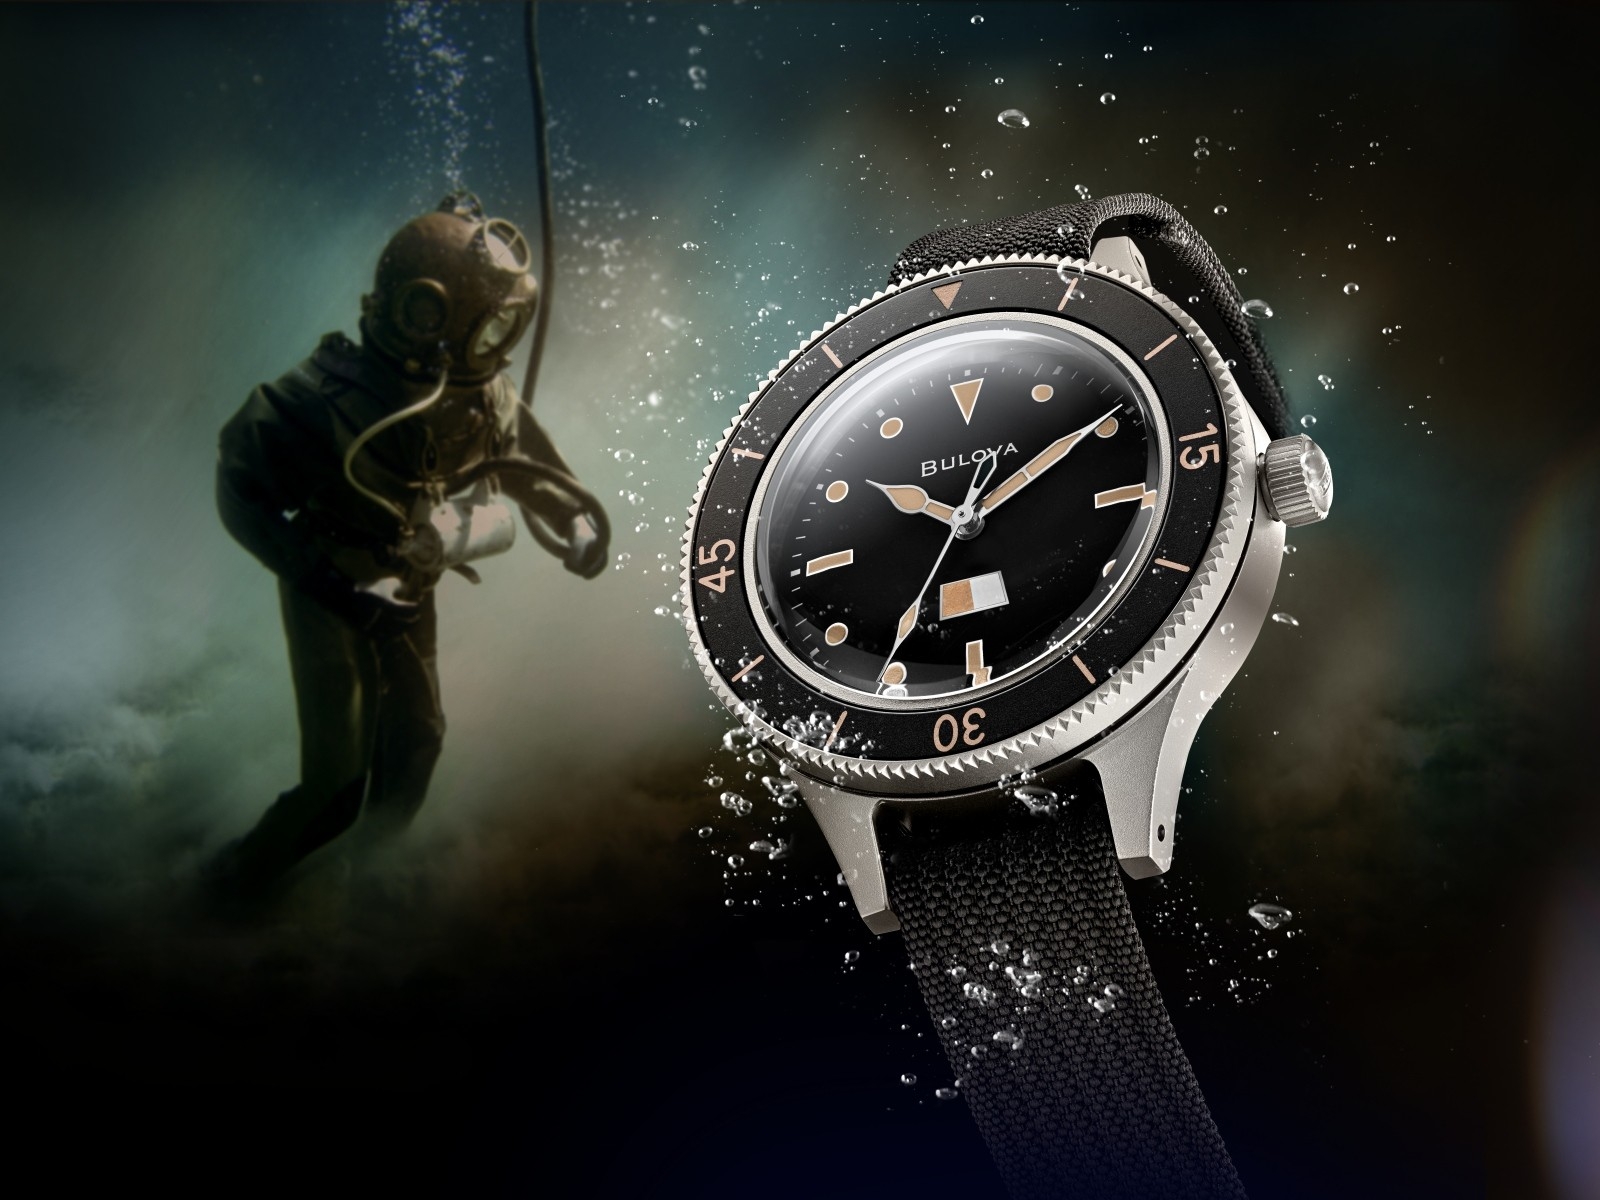 BULOVA隆重推出 Archive 系列復刻版 MIL-SHIPS-W-2181 潛水腕錶